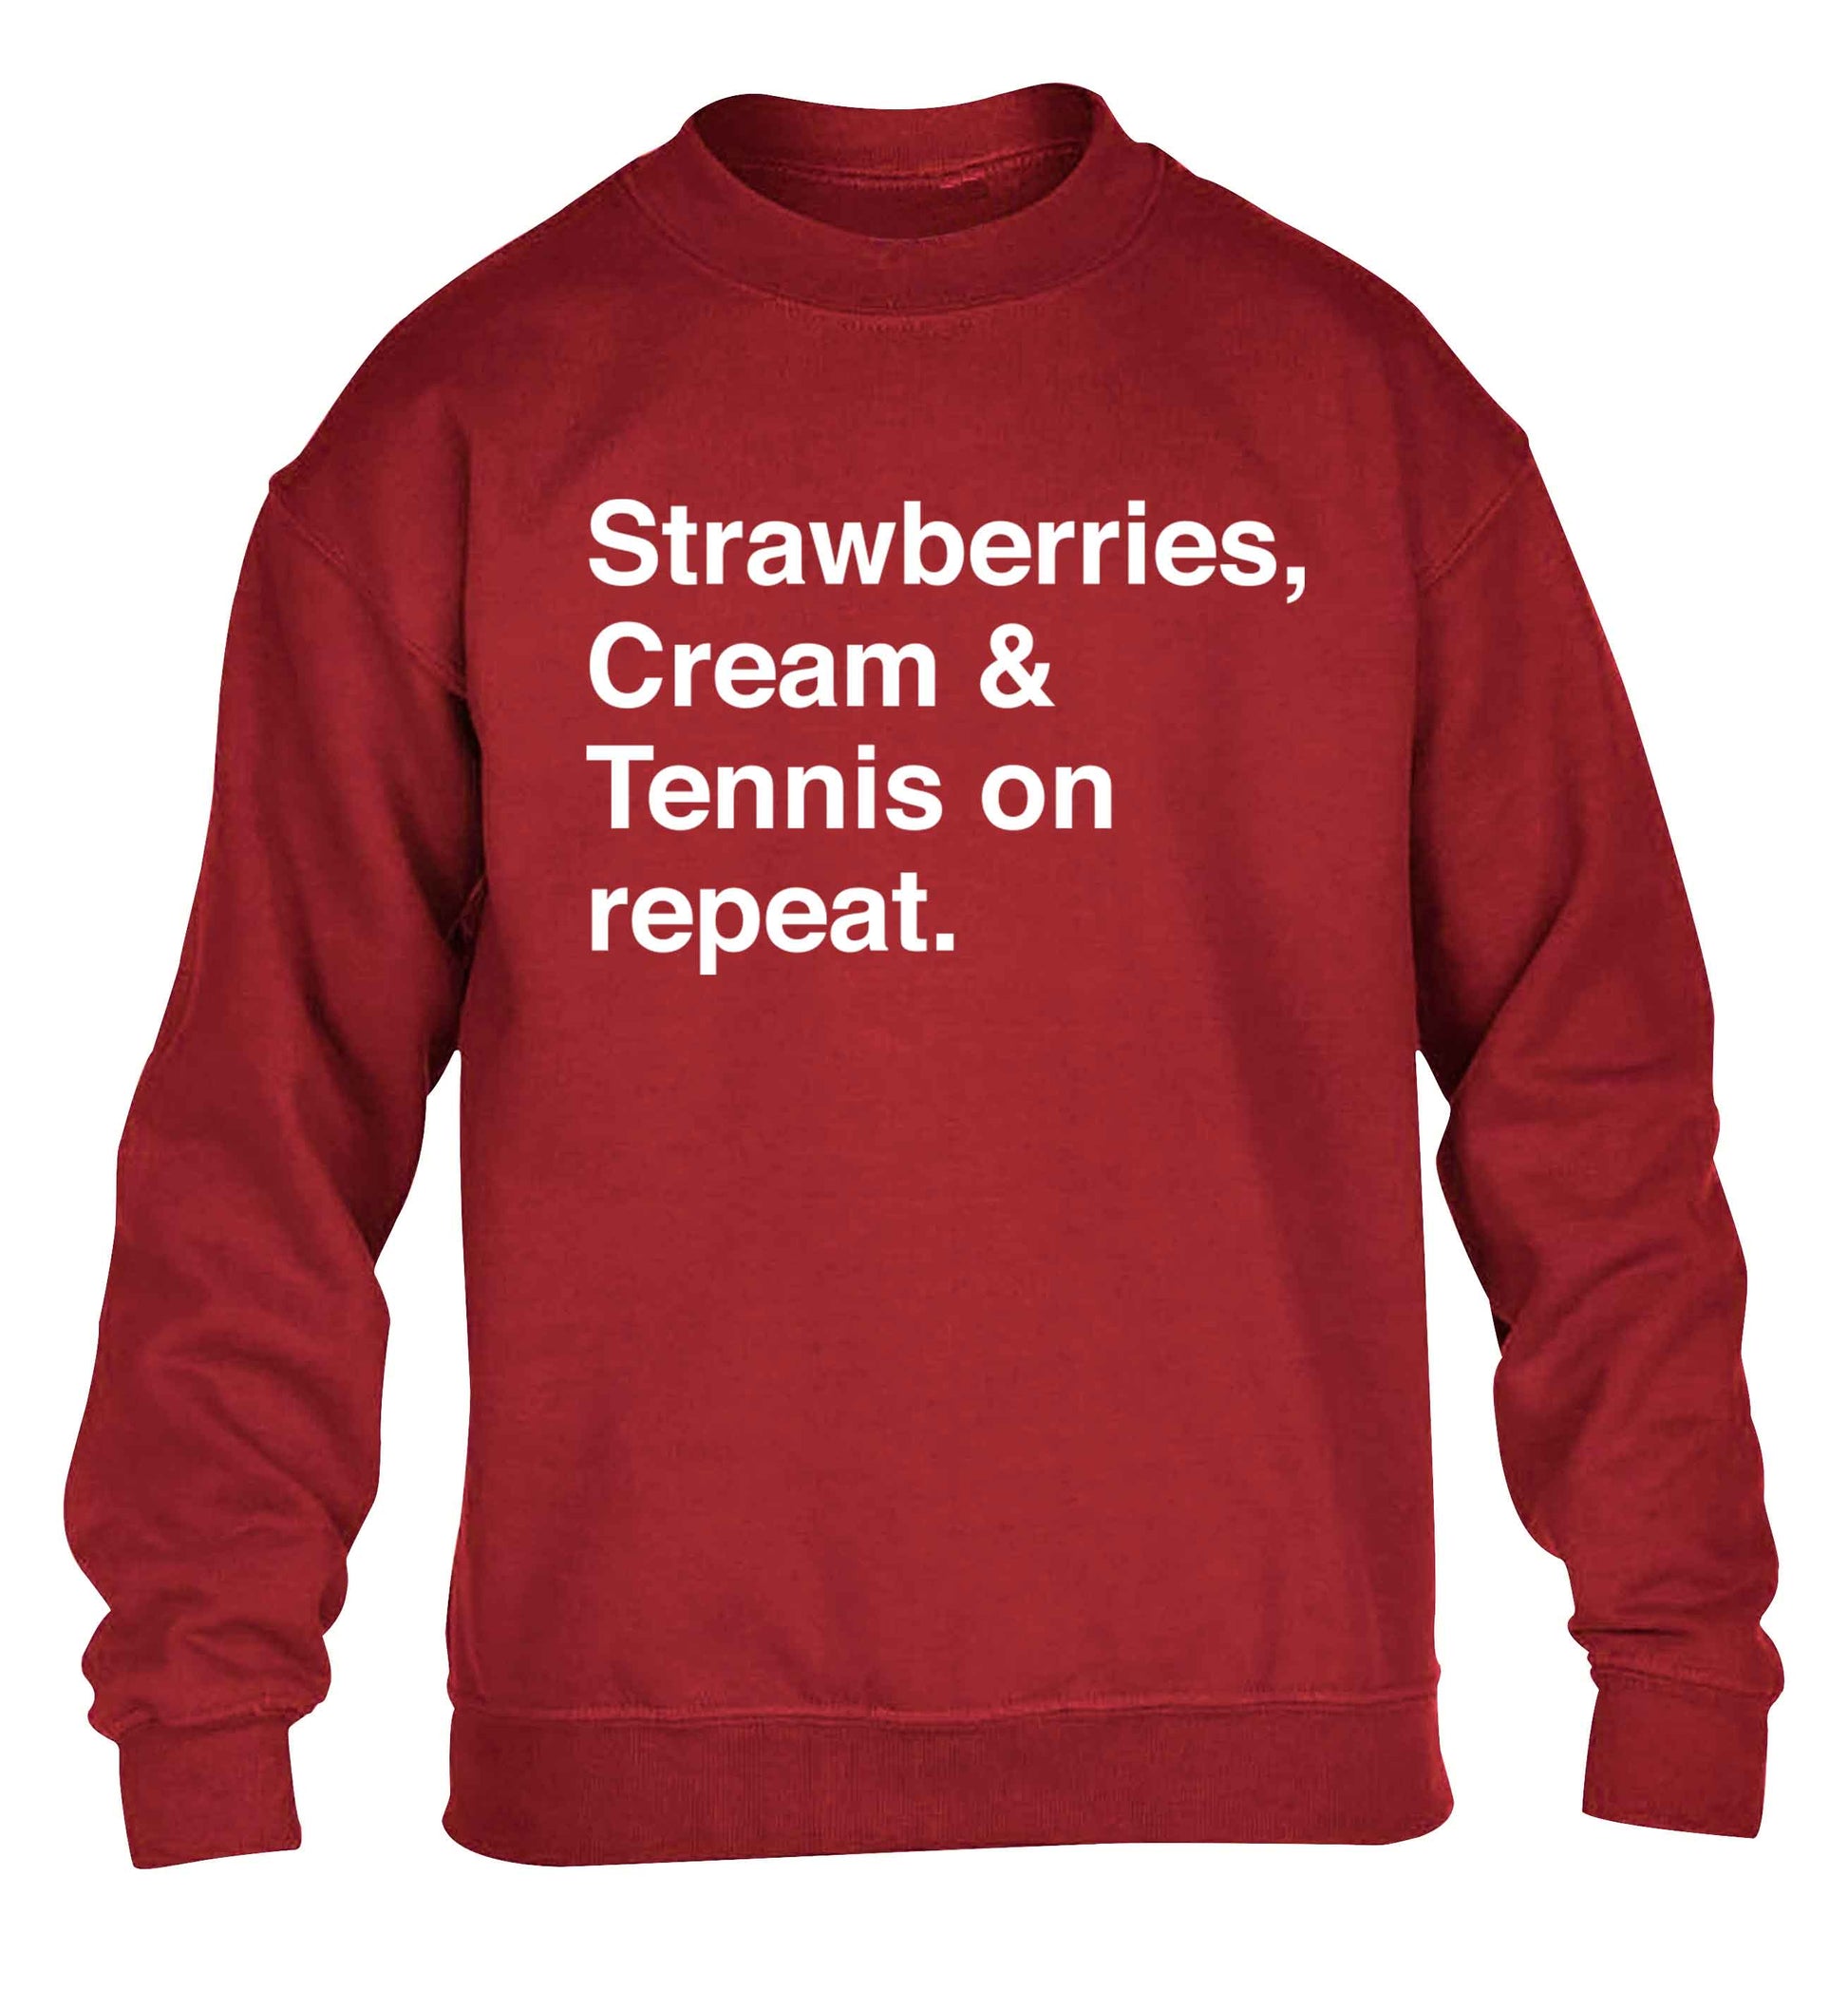 Strawberries, cream and tennis on repeat children's grey sweater 12-13 Years